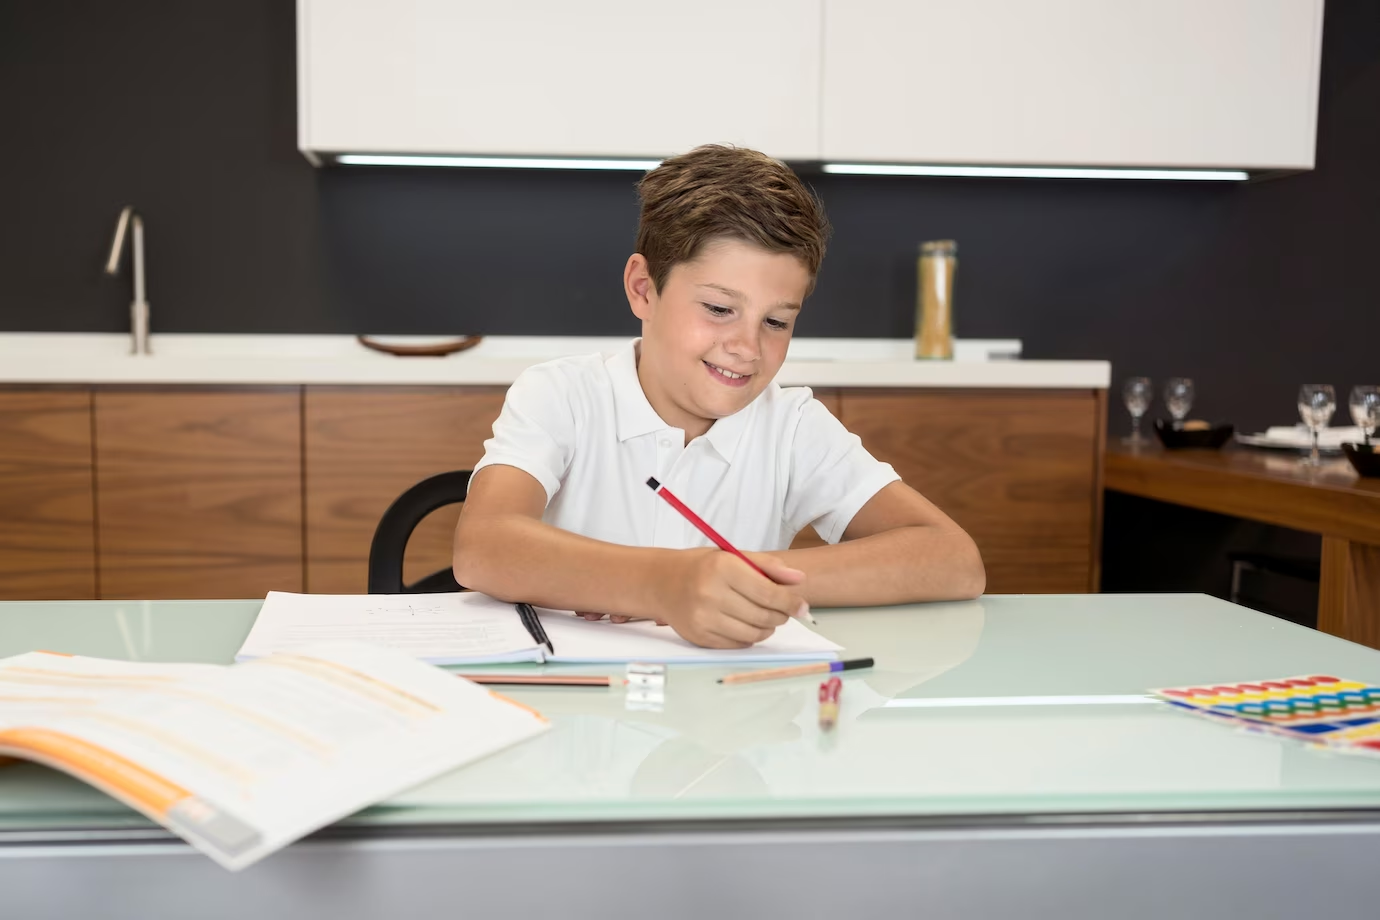 A kid writing an essay